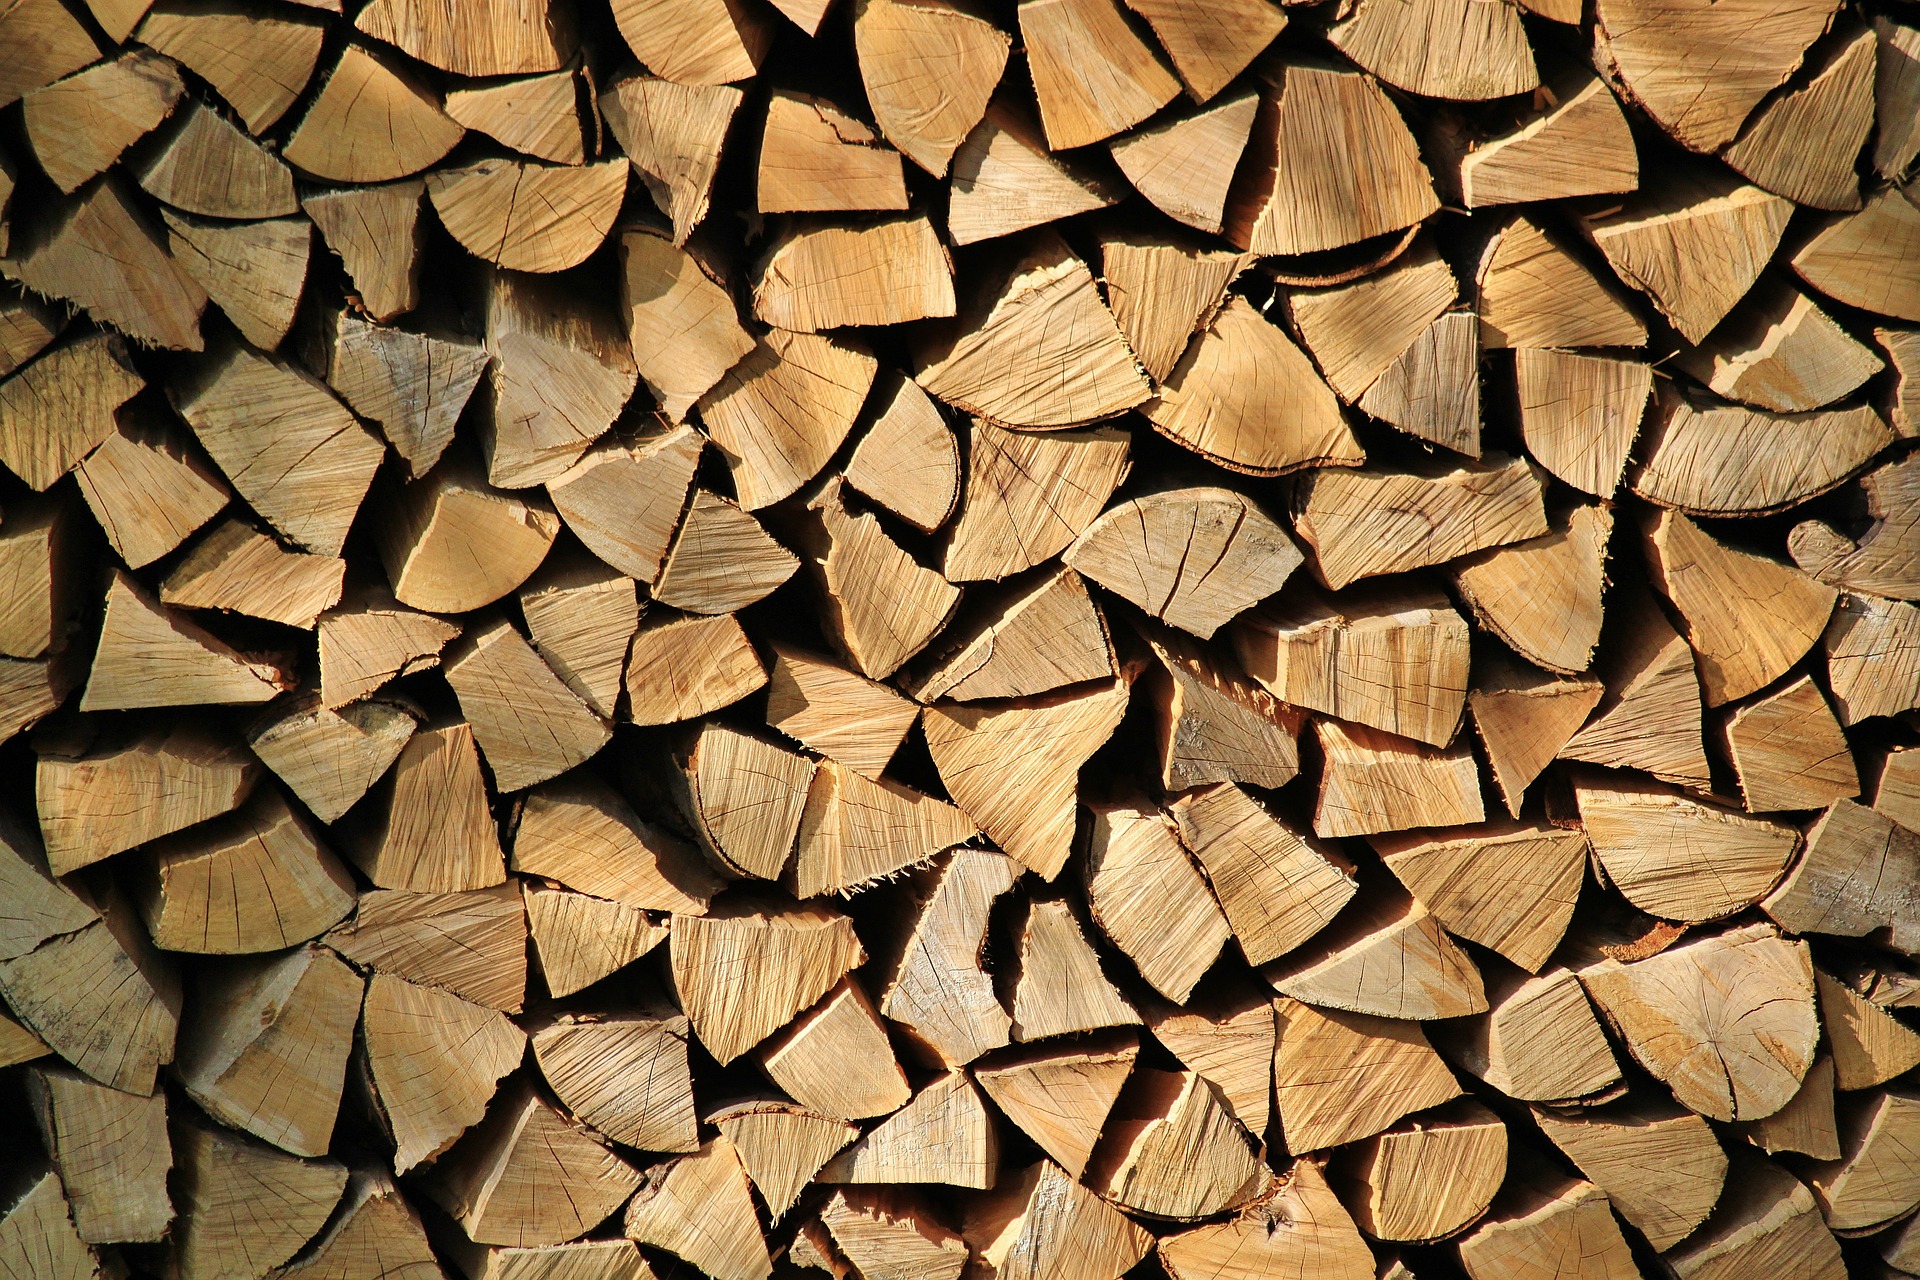 Kaminholz / Brennholz - Premium-Brennholz, hoher Brennwert, ruhiges Abbrandverhalten, schönes Flammenbild